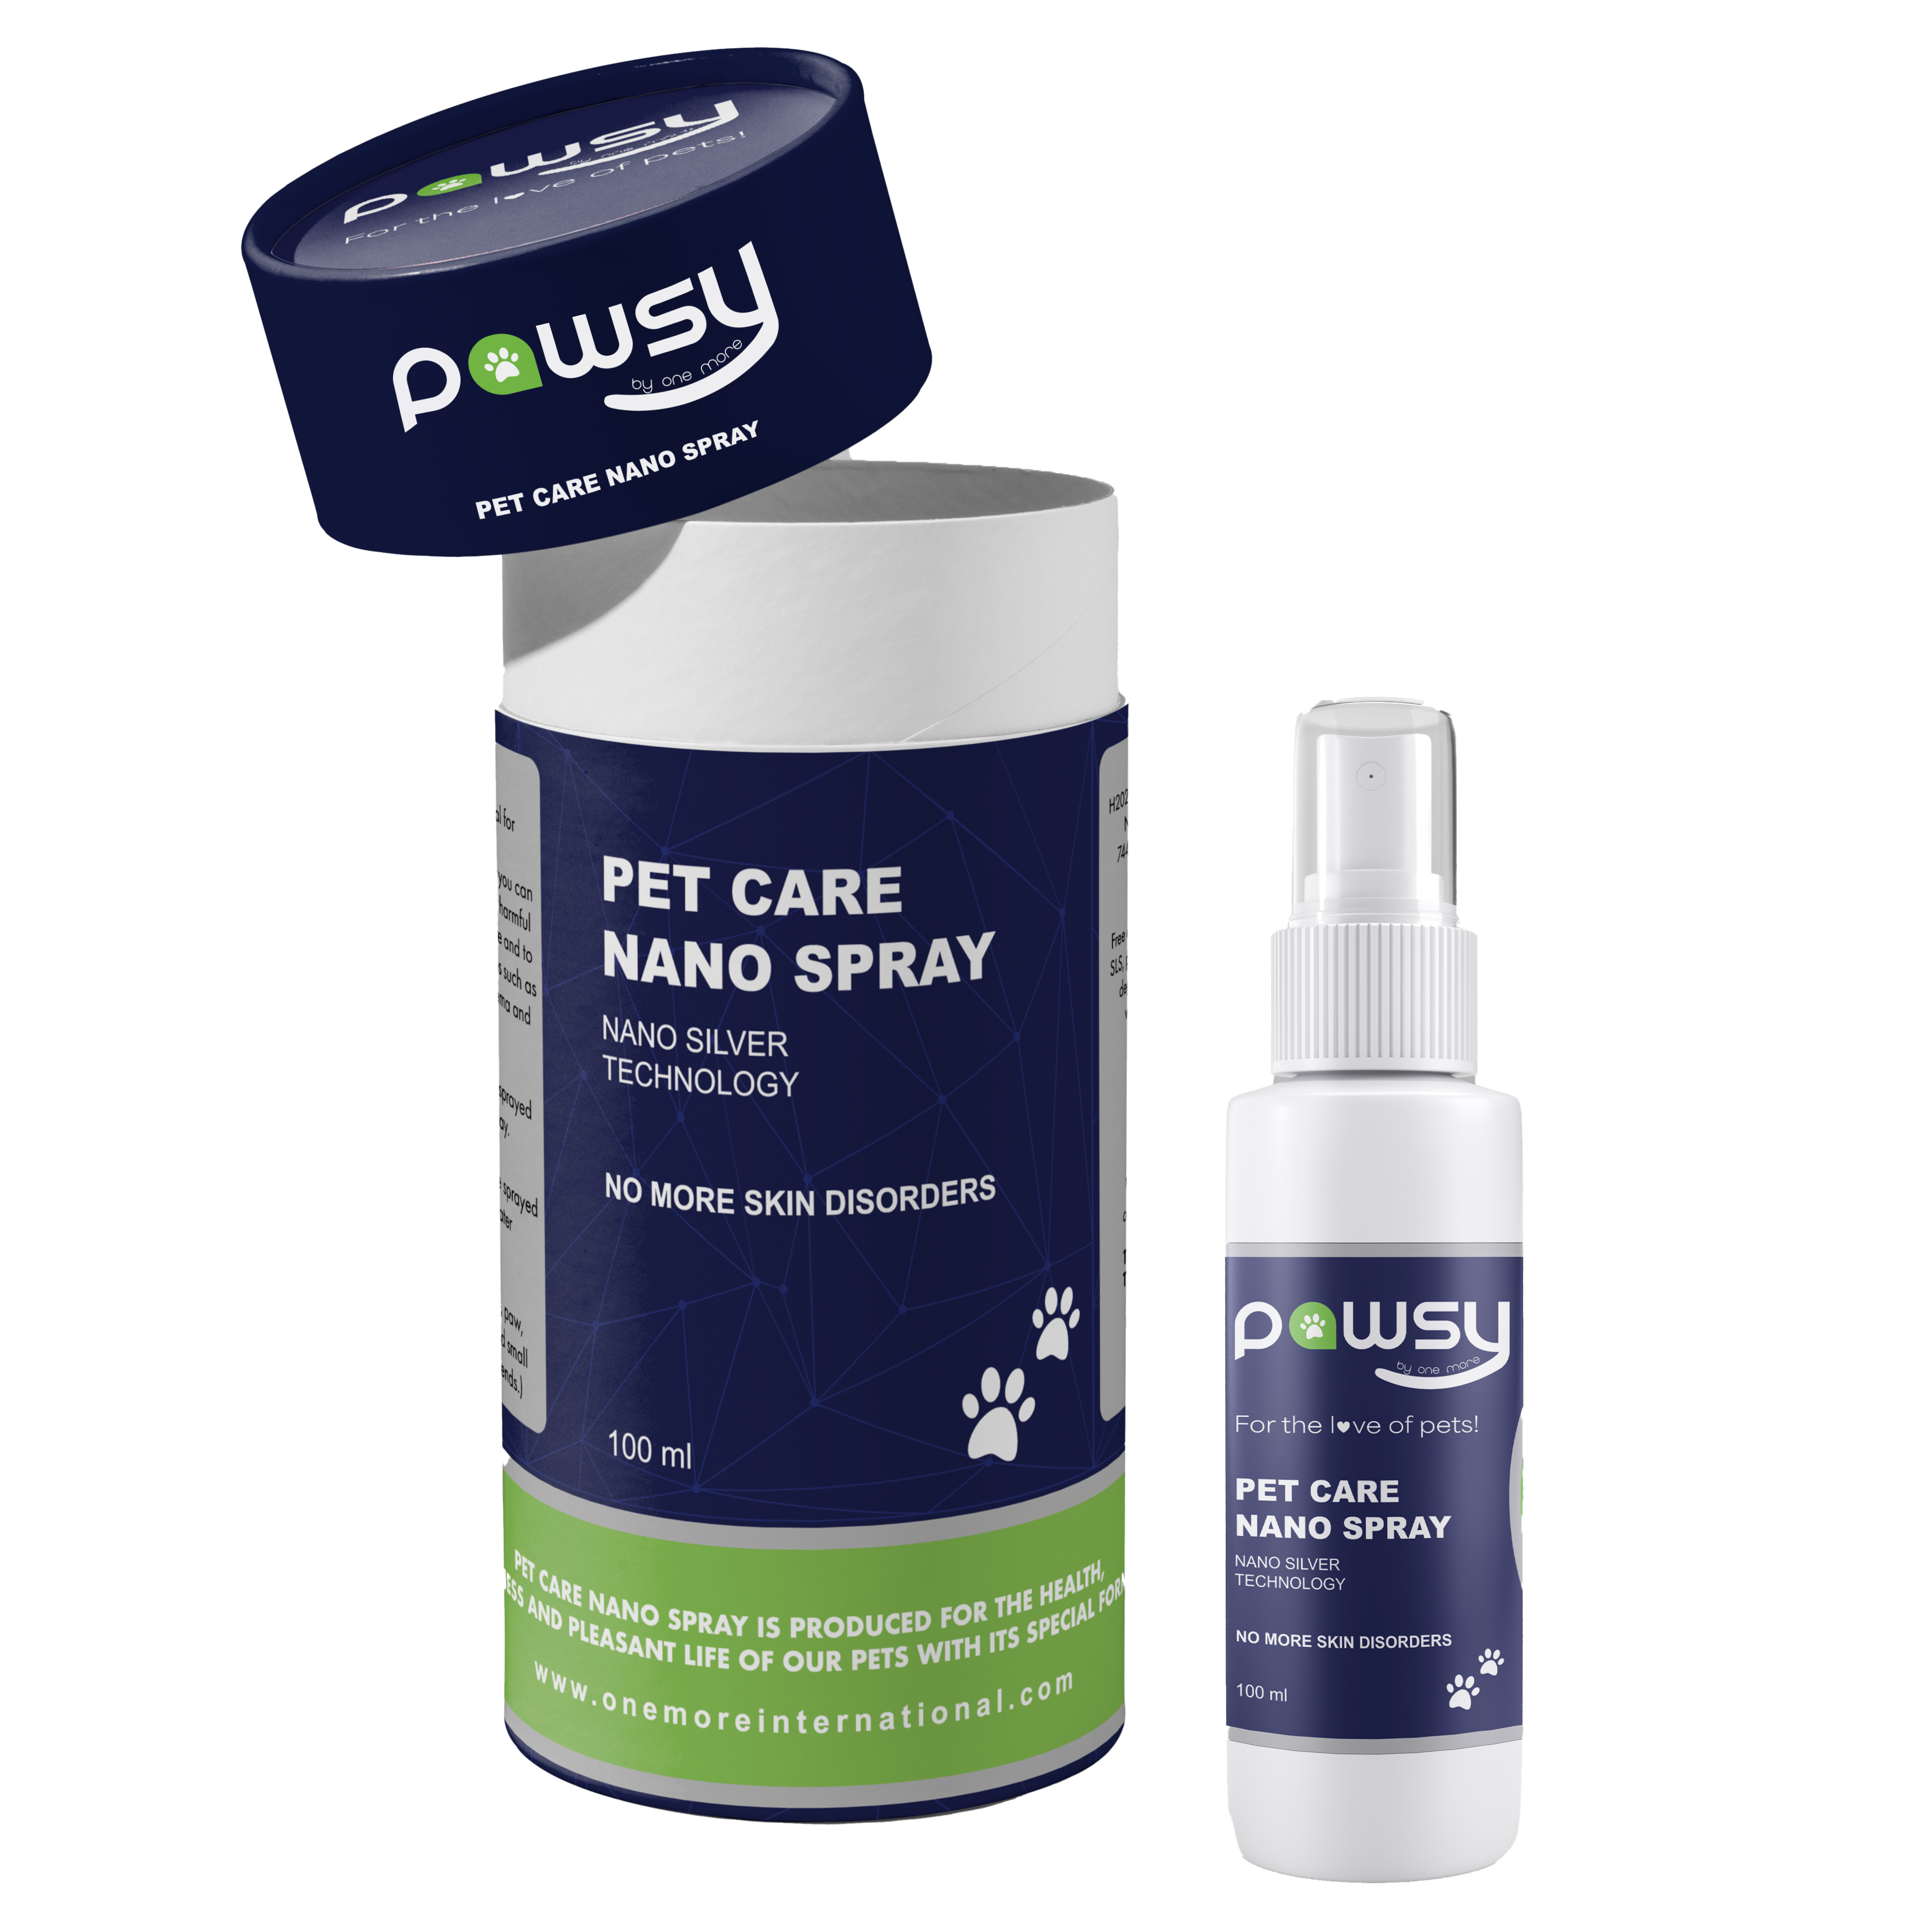 Pawsy By One More Pet Care Nano Spray